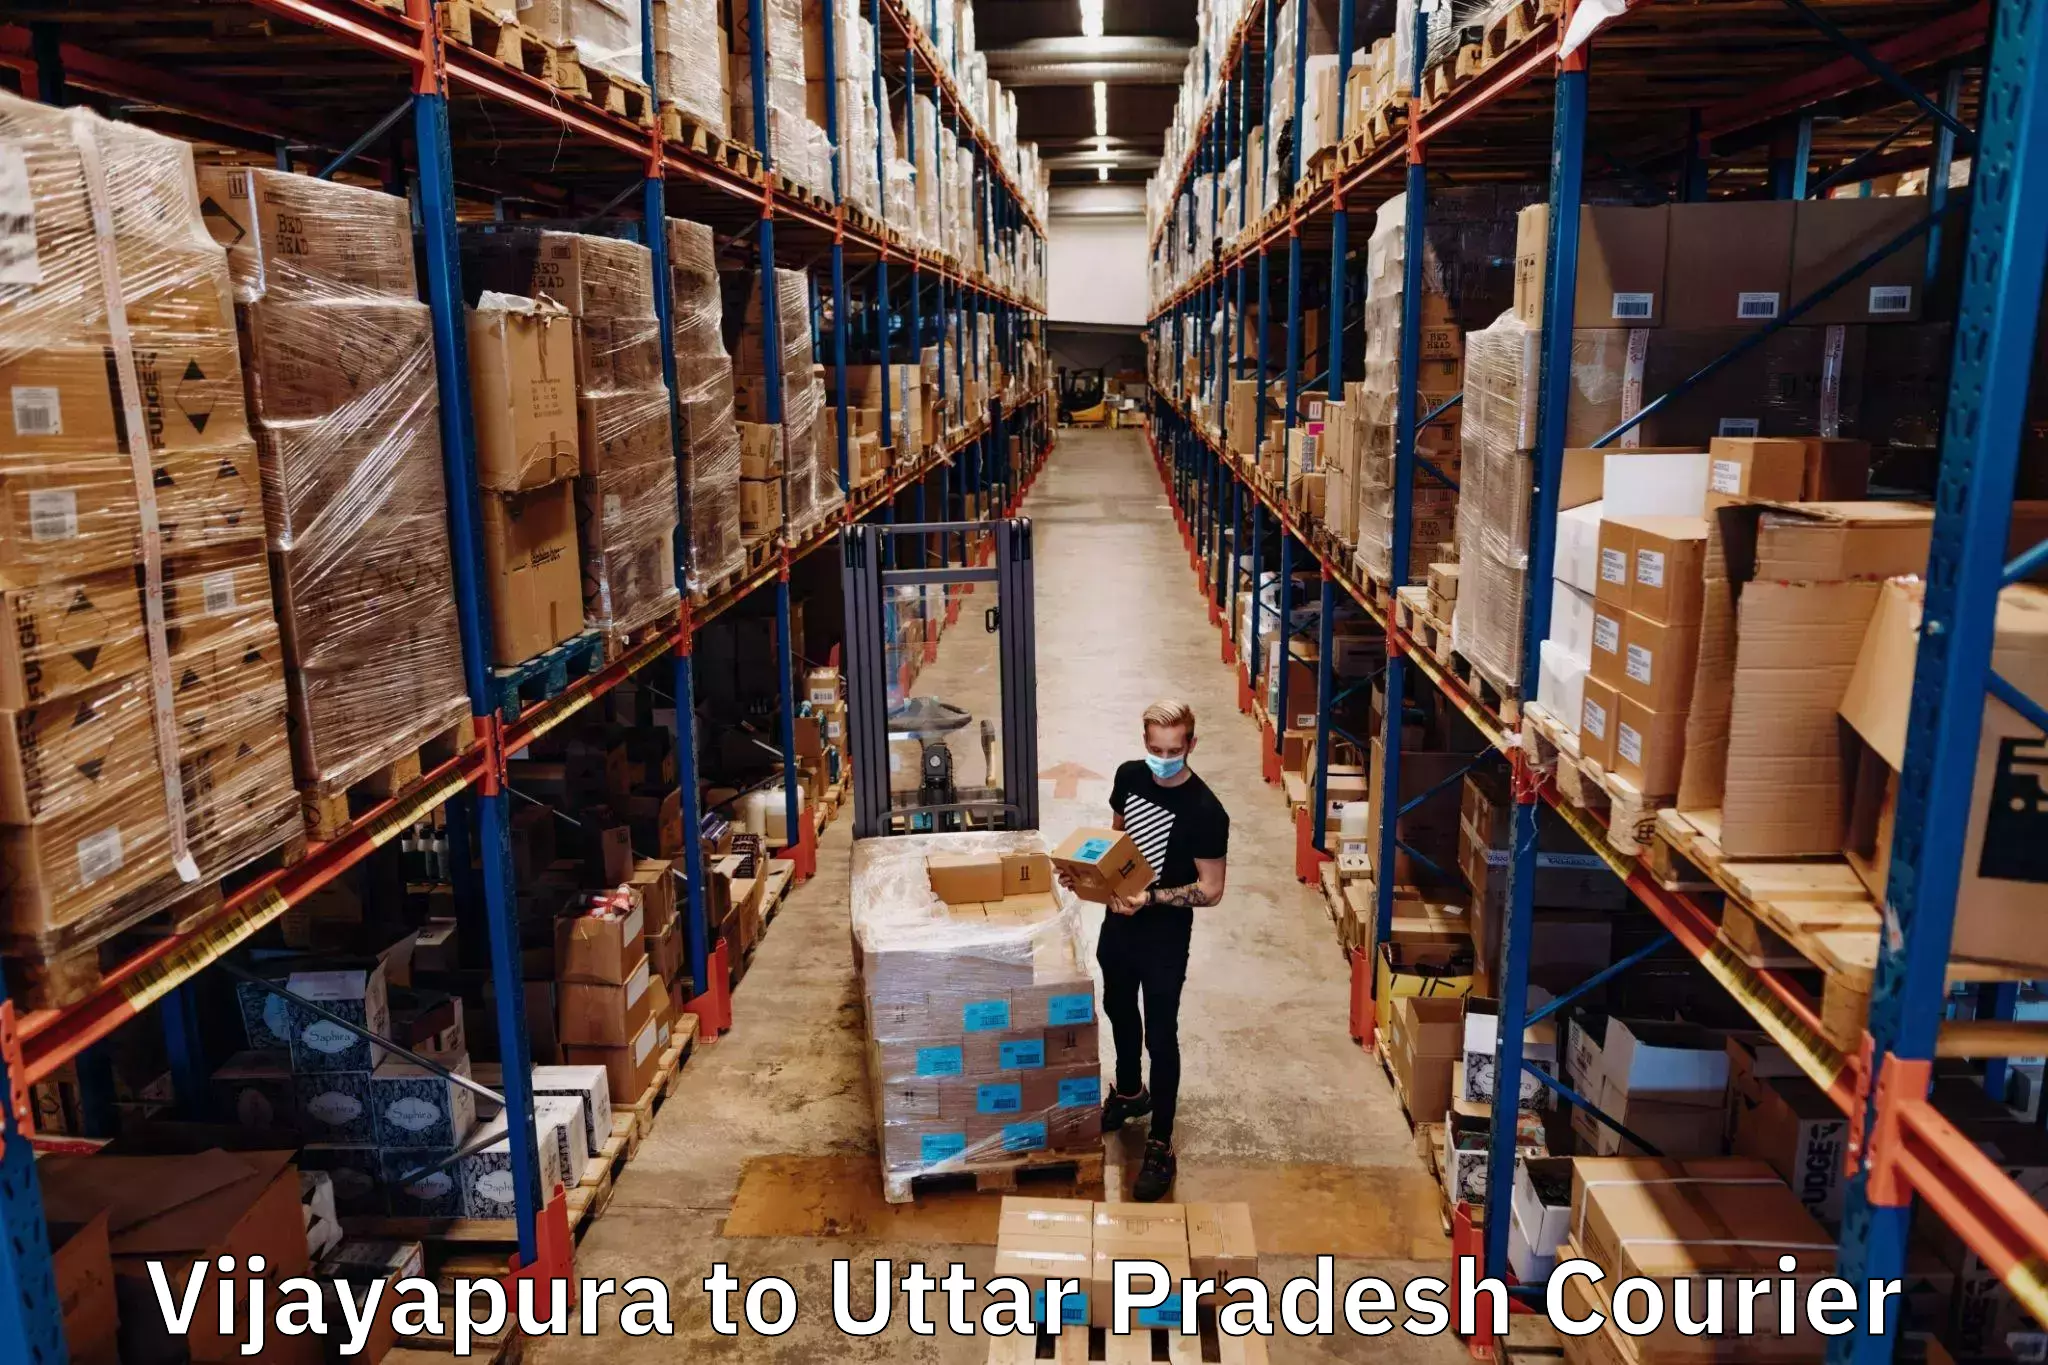 Urban courier service Vijayapura to Mathura